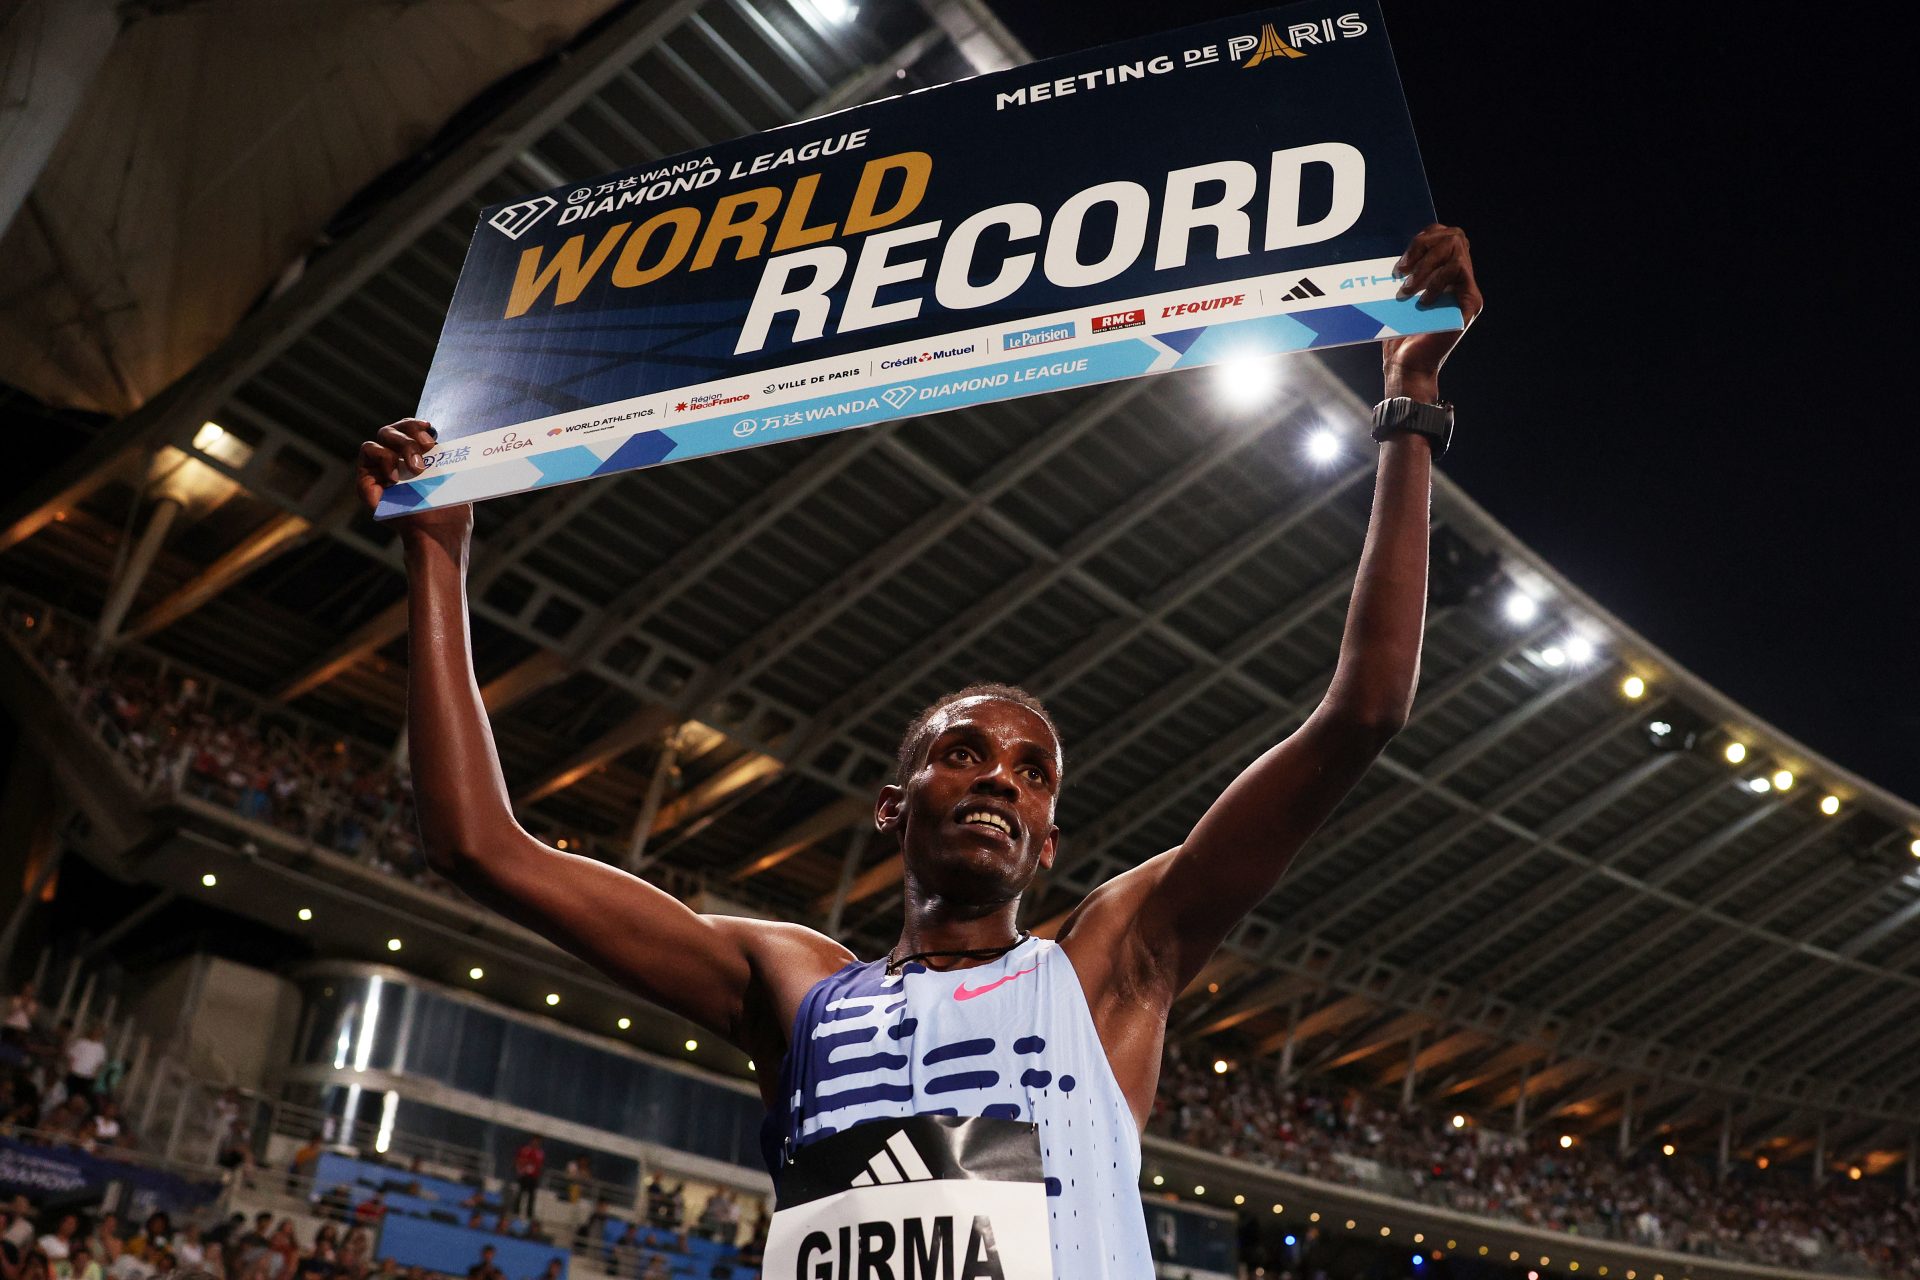 Men's 3000m steeplechase: 7:52.11 - Lamecha Girma